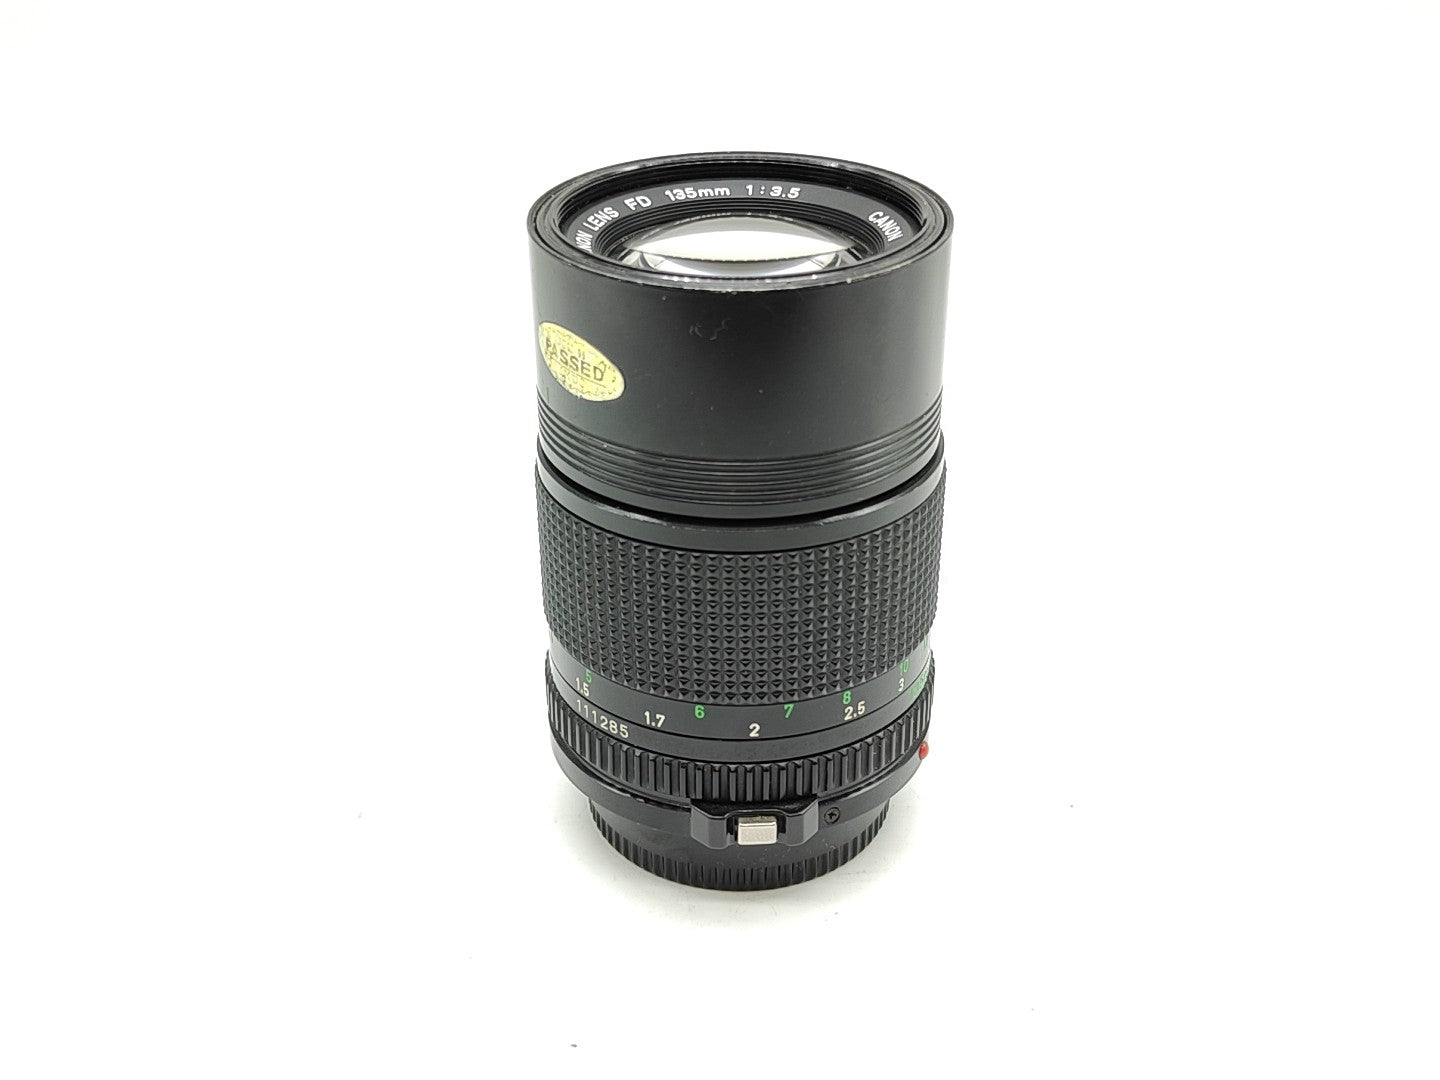 Canon lens: 135mm f/3.5 New FD portrait / medium telephoto lens for AE-1, FTb etc.